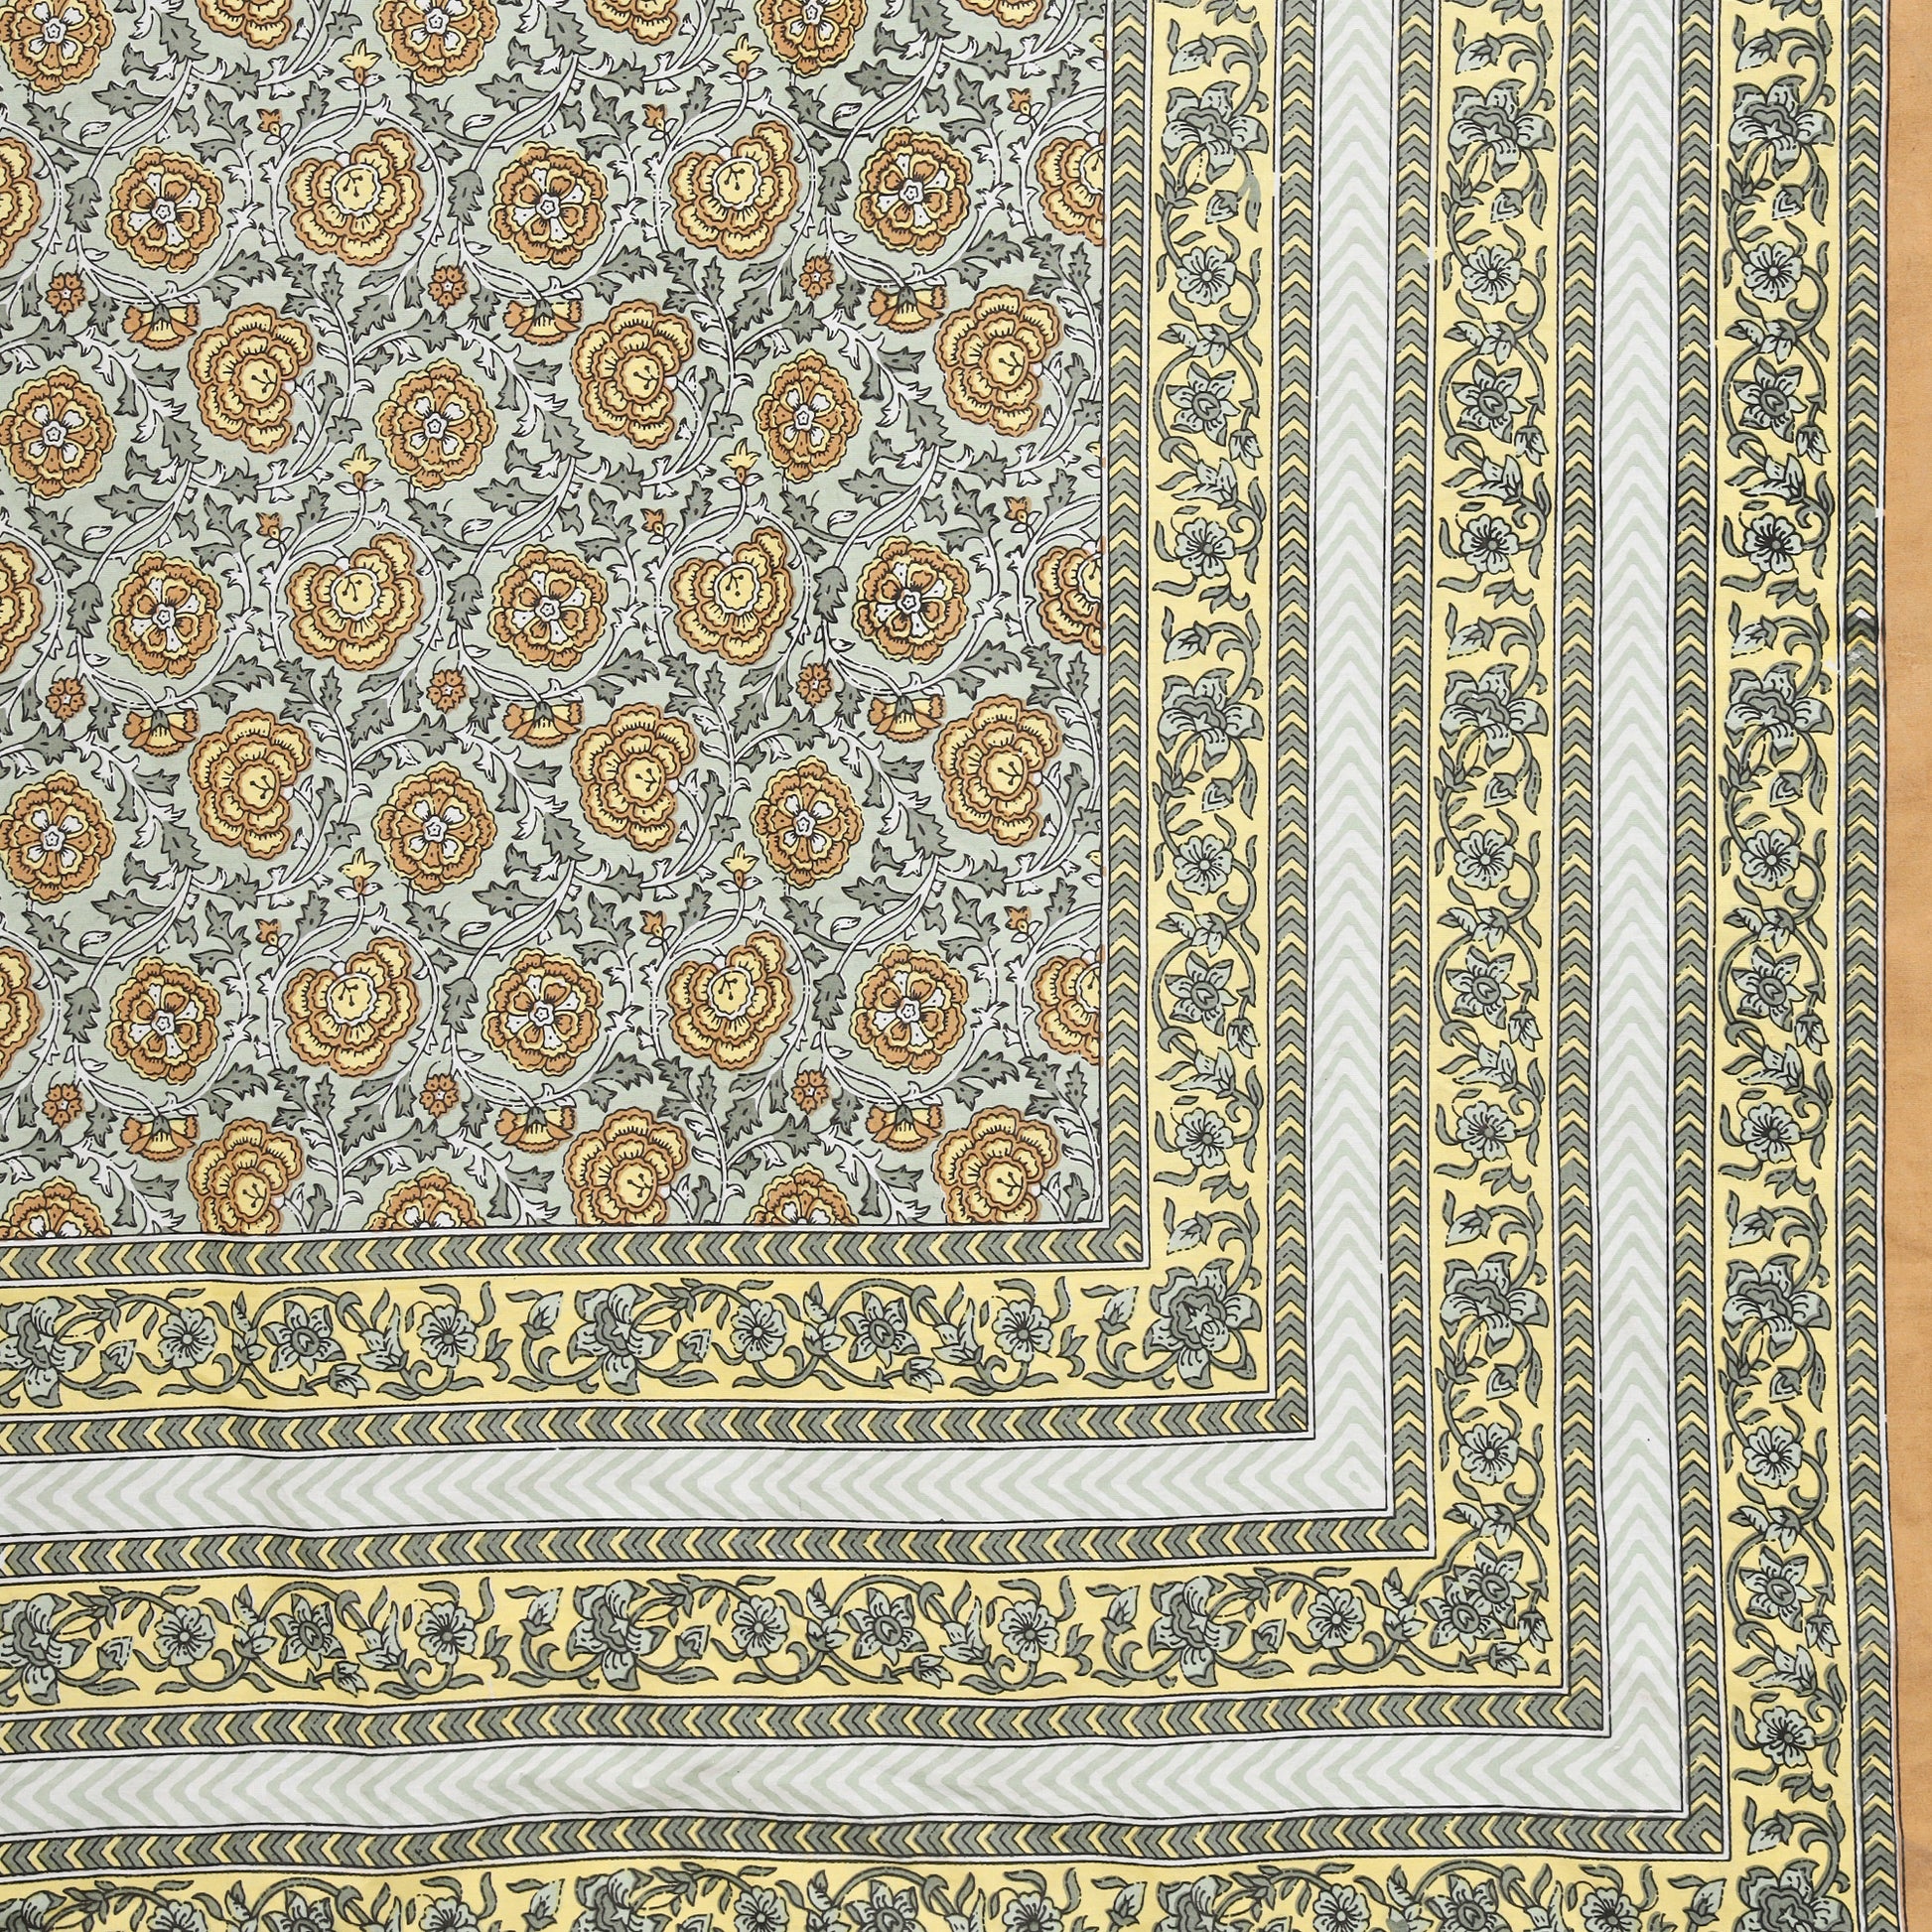 Pure Cotton Block Print Jaipuri Bedsheet - Super King Size 120*120 inches - Yellow Brown Flowers